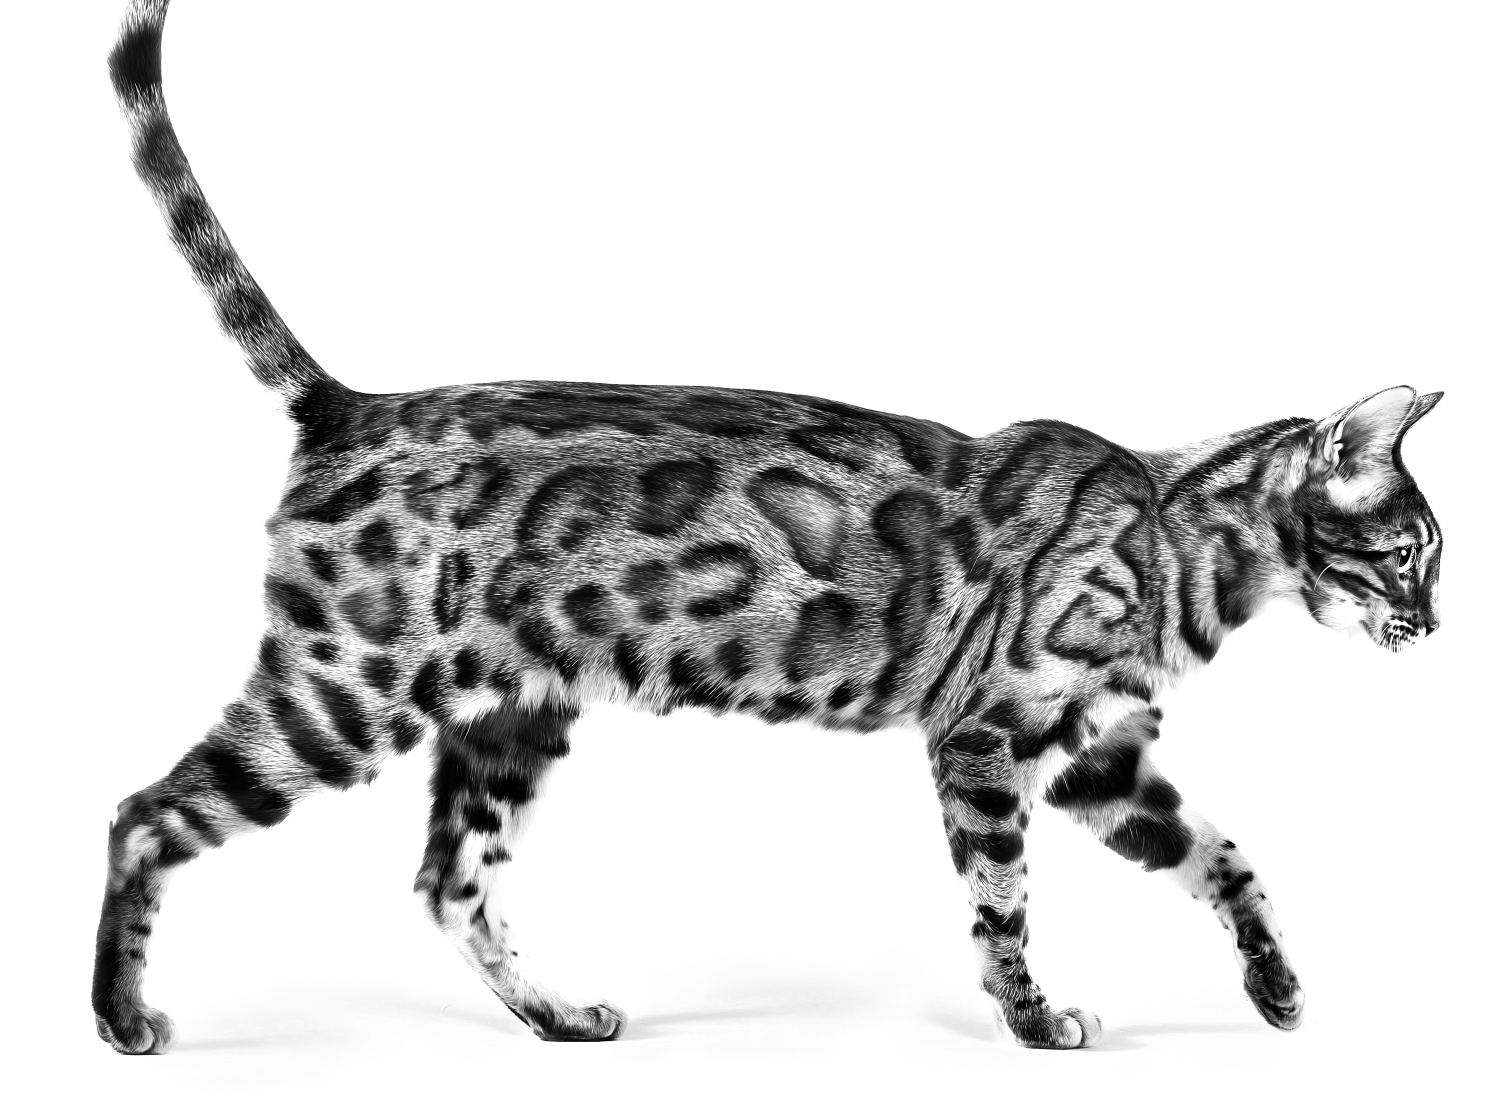 Vista lateral de un gato Bengalí caminando en blanco y negro